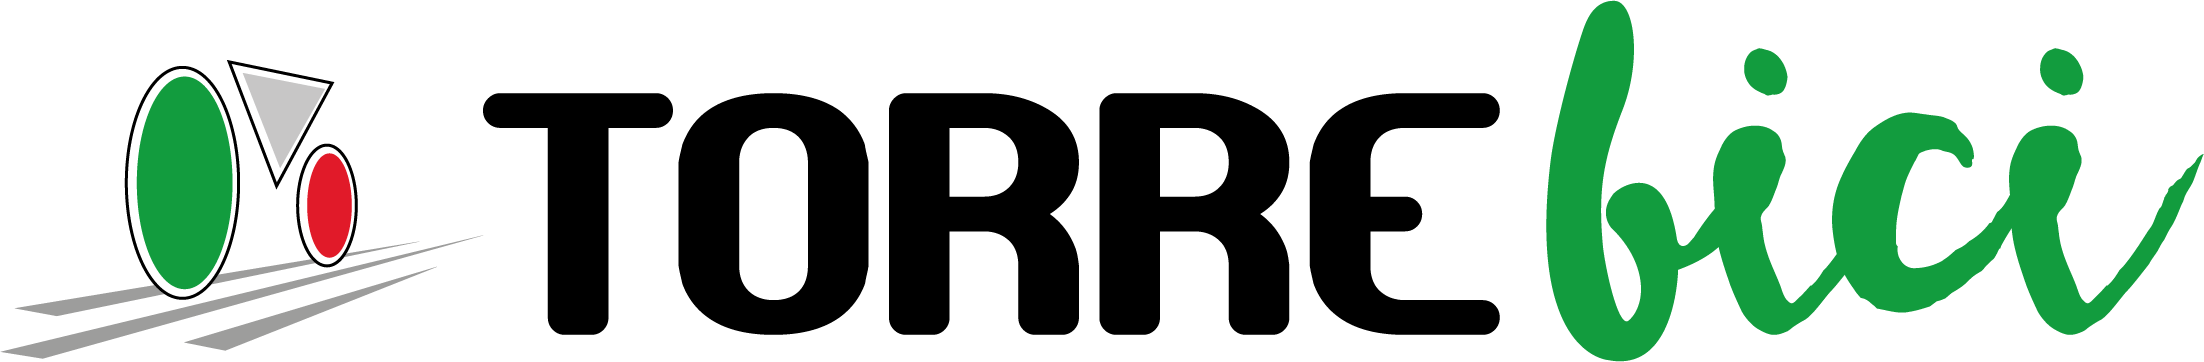 Logo Torrebici